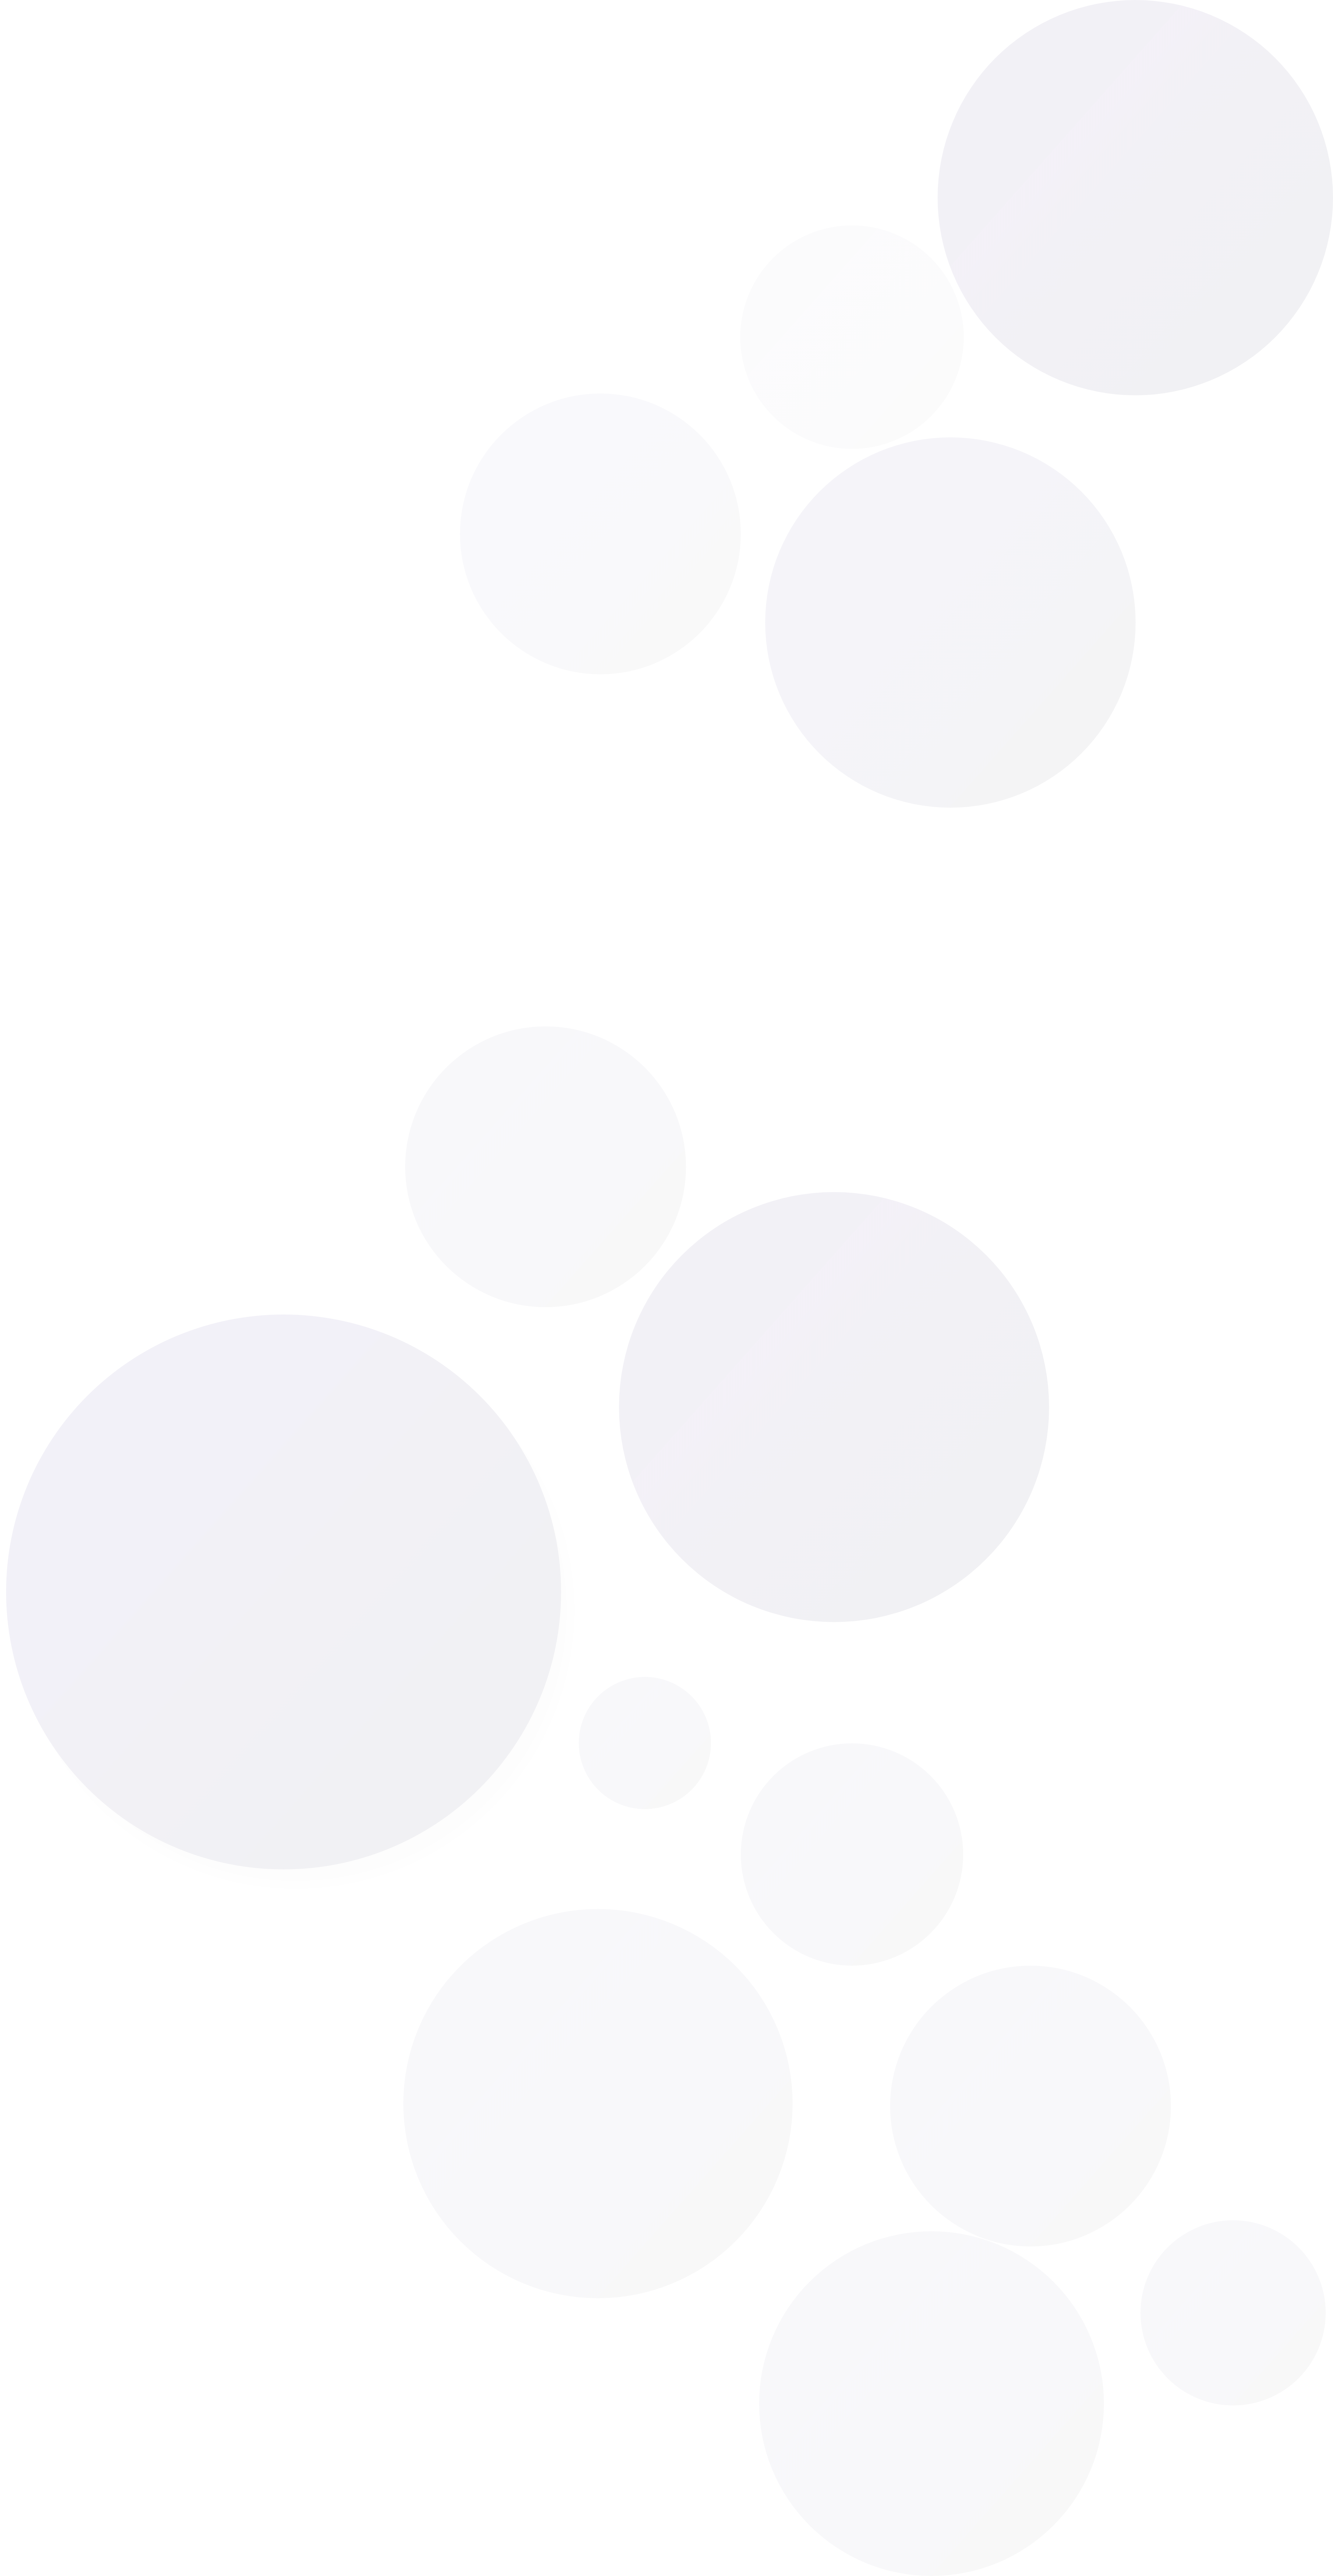 background images of floating balls